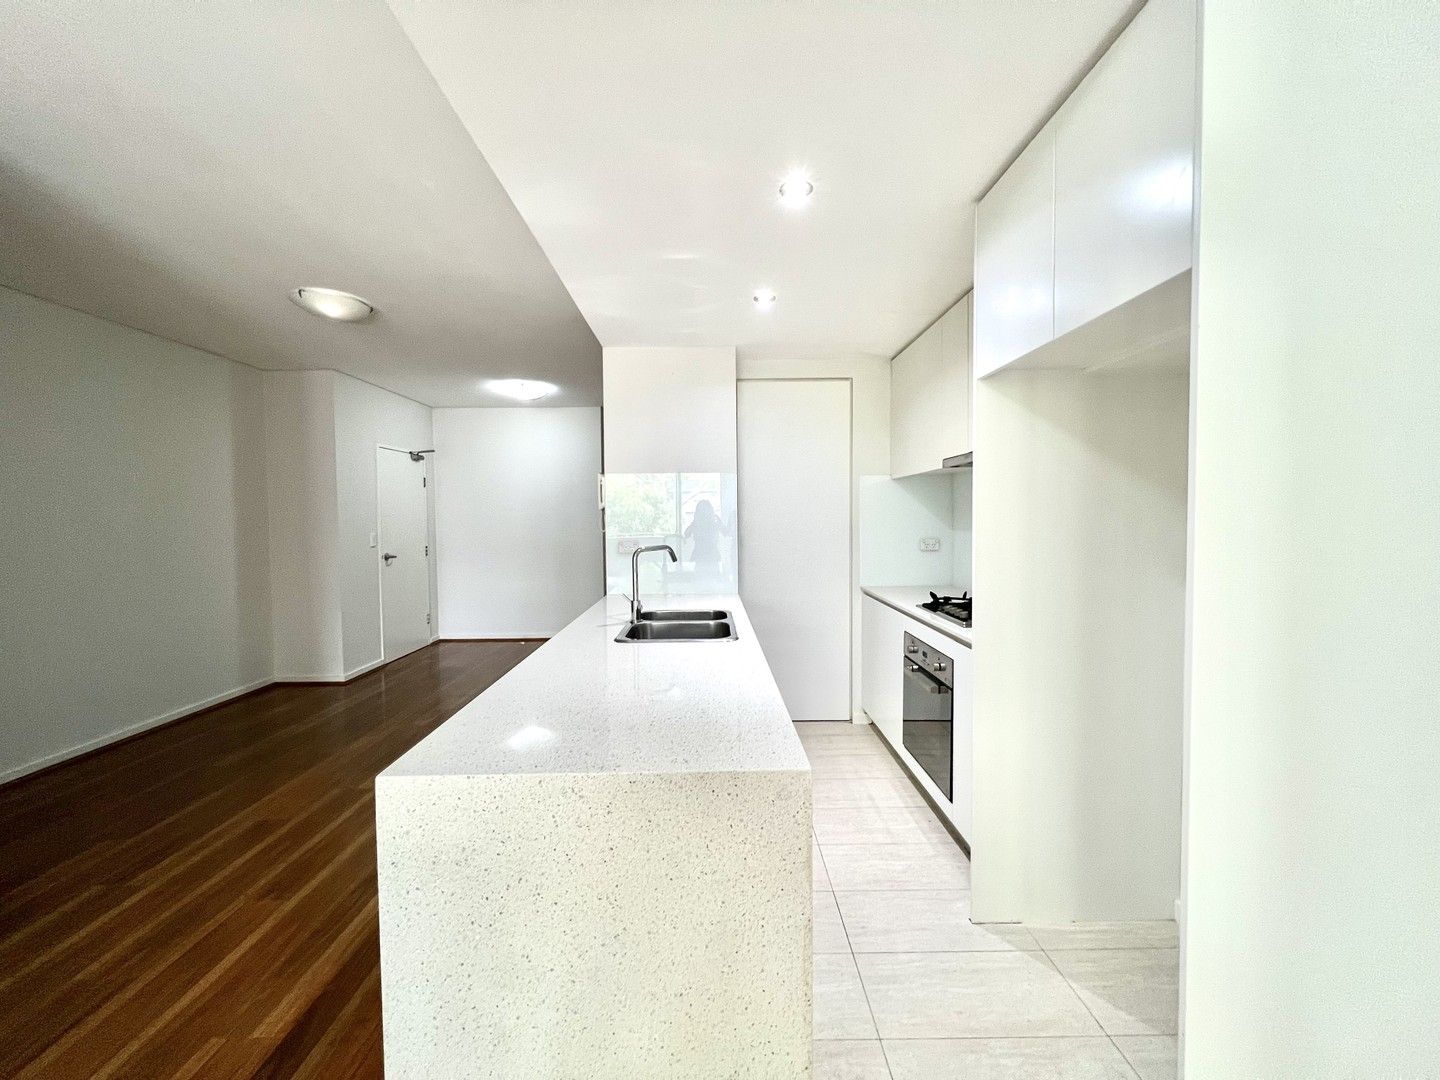 2 bedrooms Apartment / Unit / Flat in Lamond Drive TURRAMURRA NSW, 2074